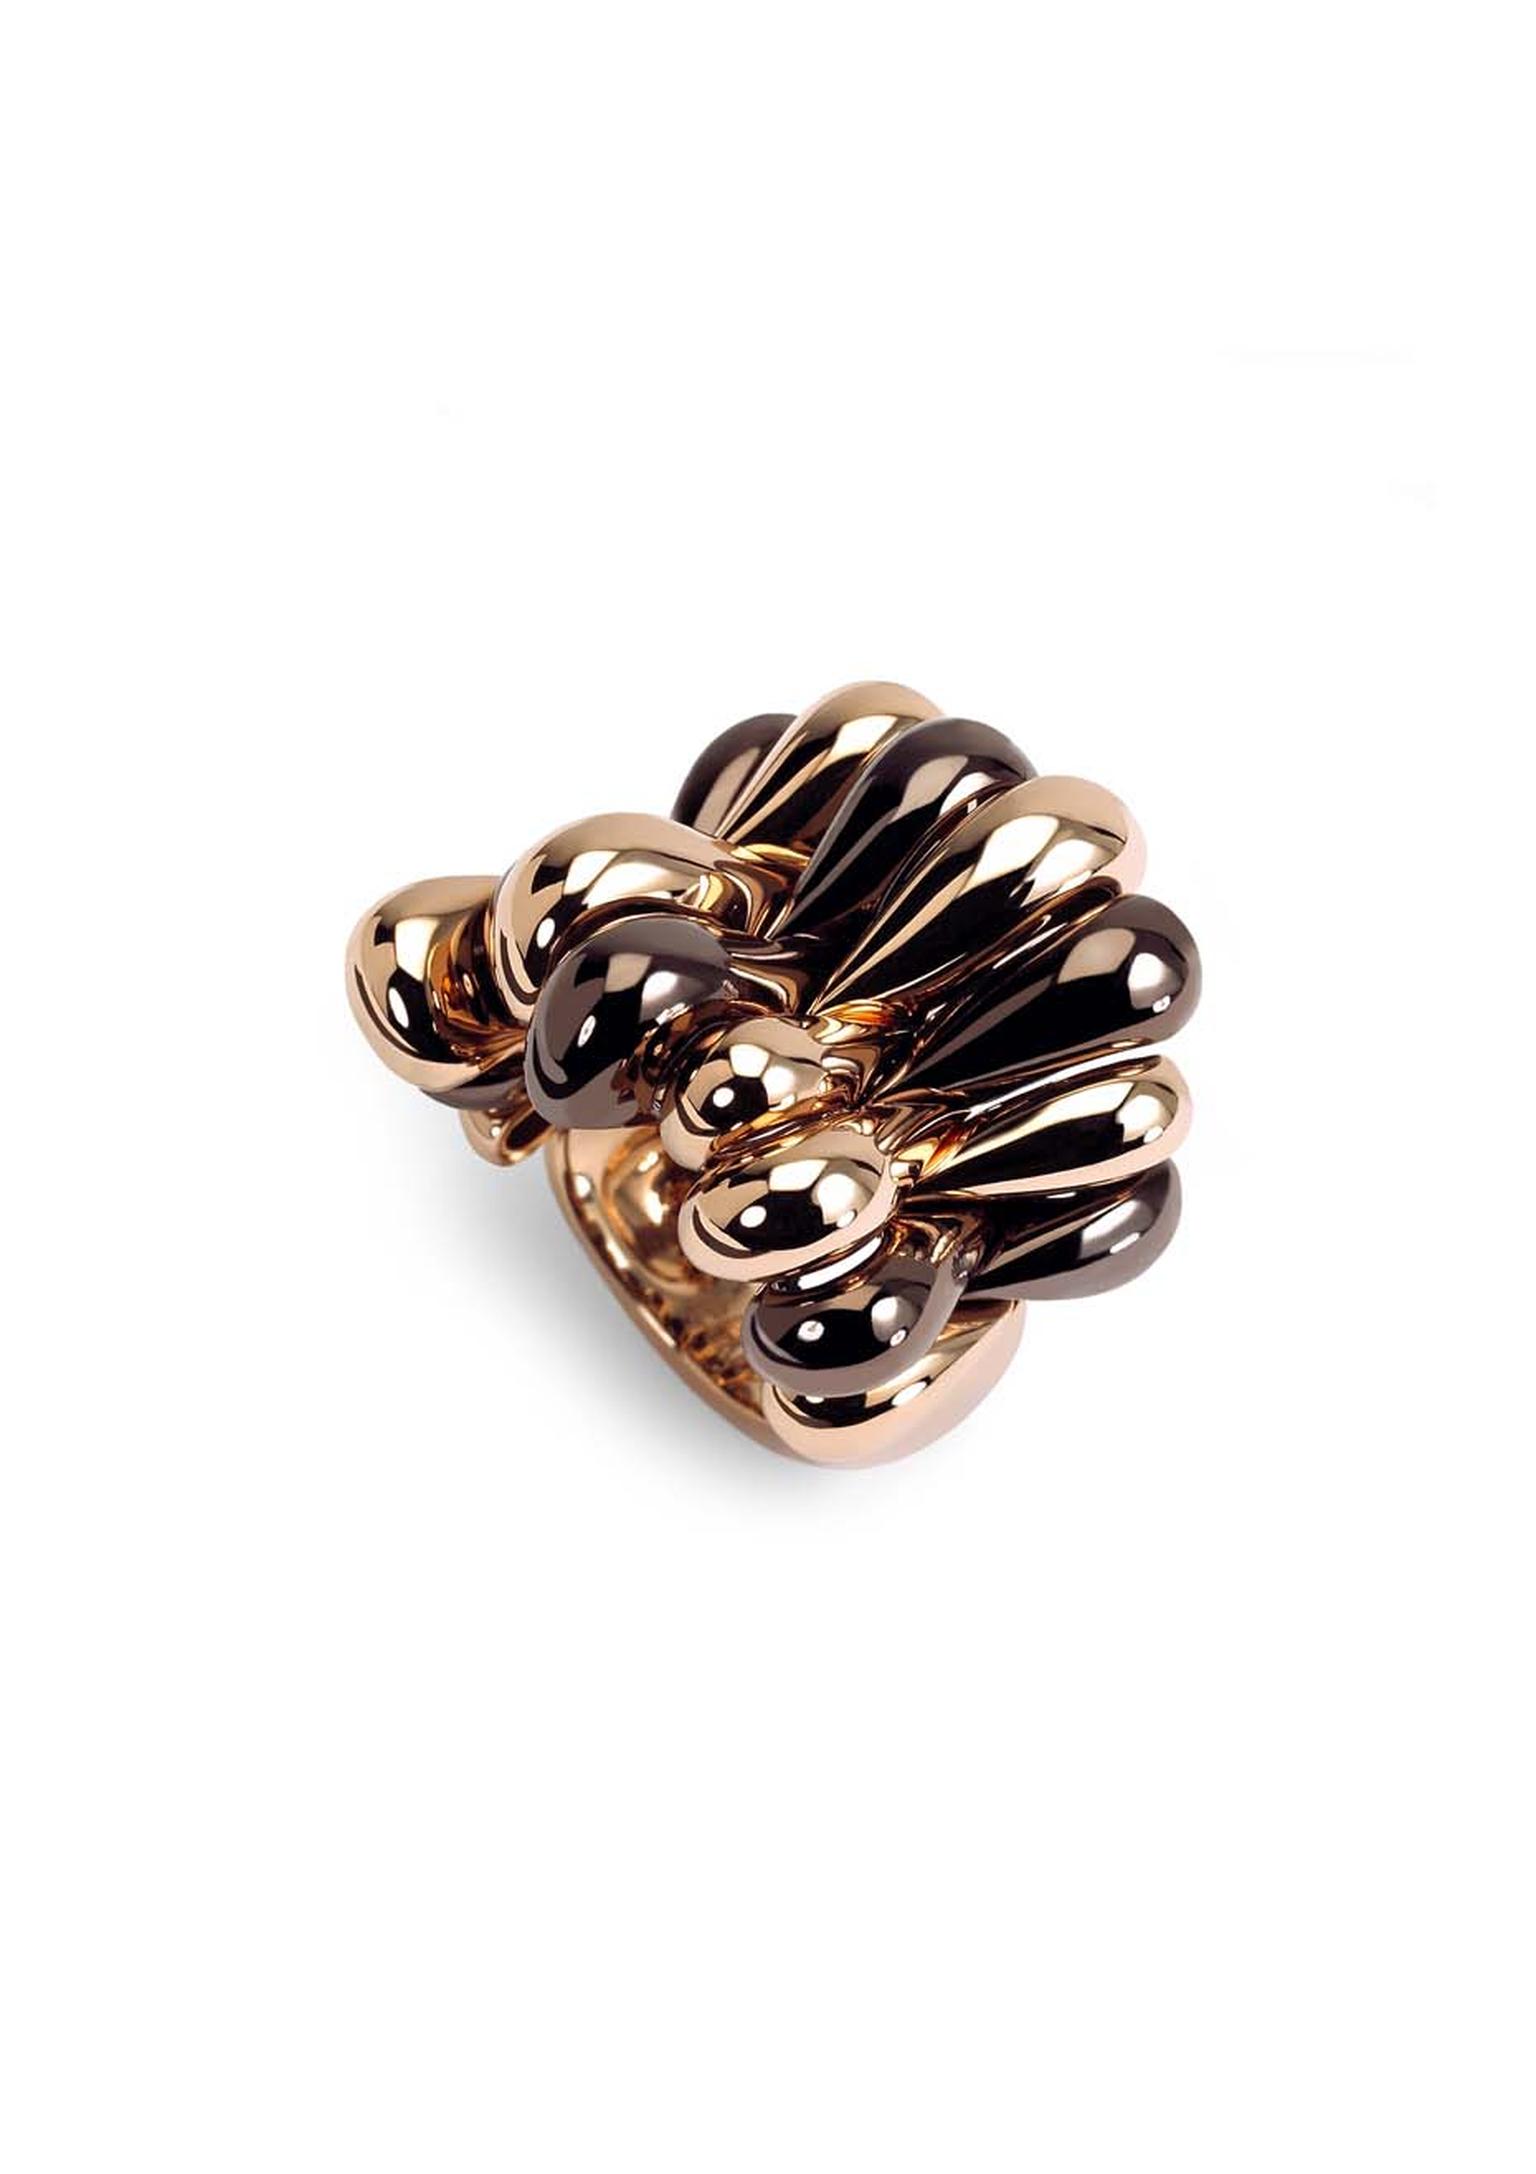 de GRISOGONO rose gold Gocce ring, as worn by Toni Garrn